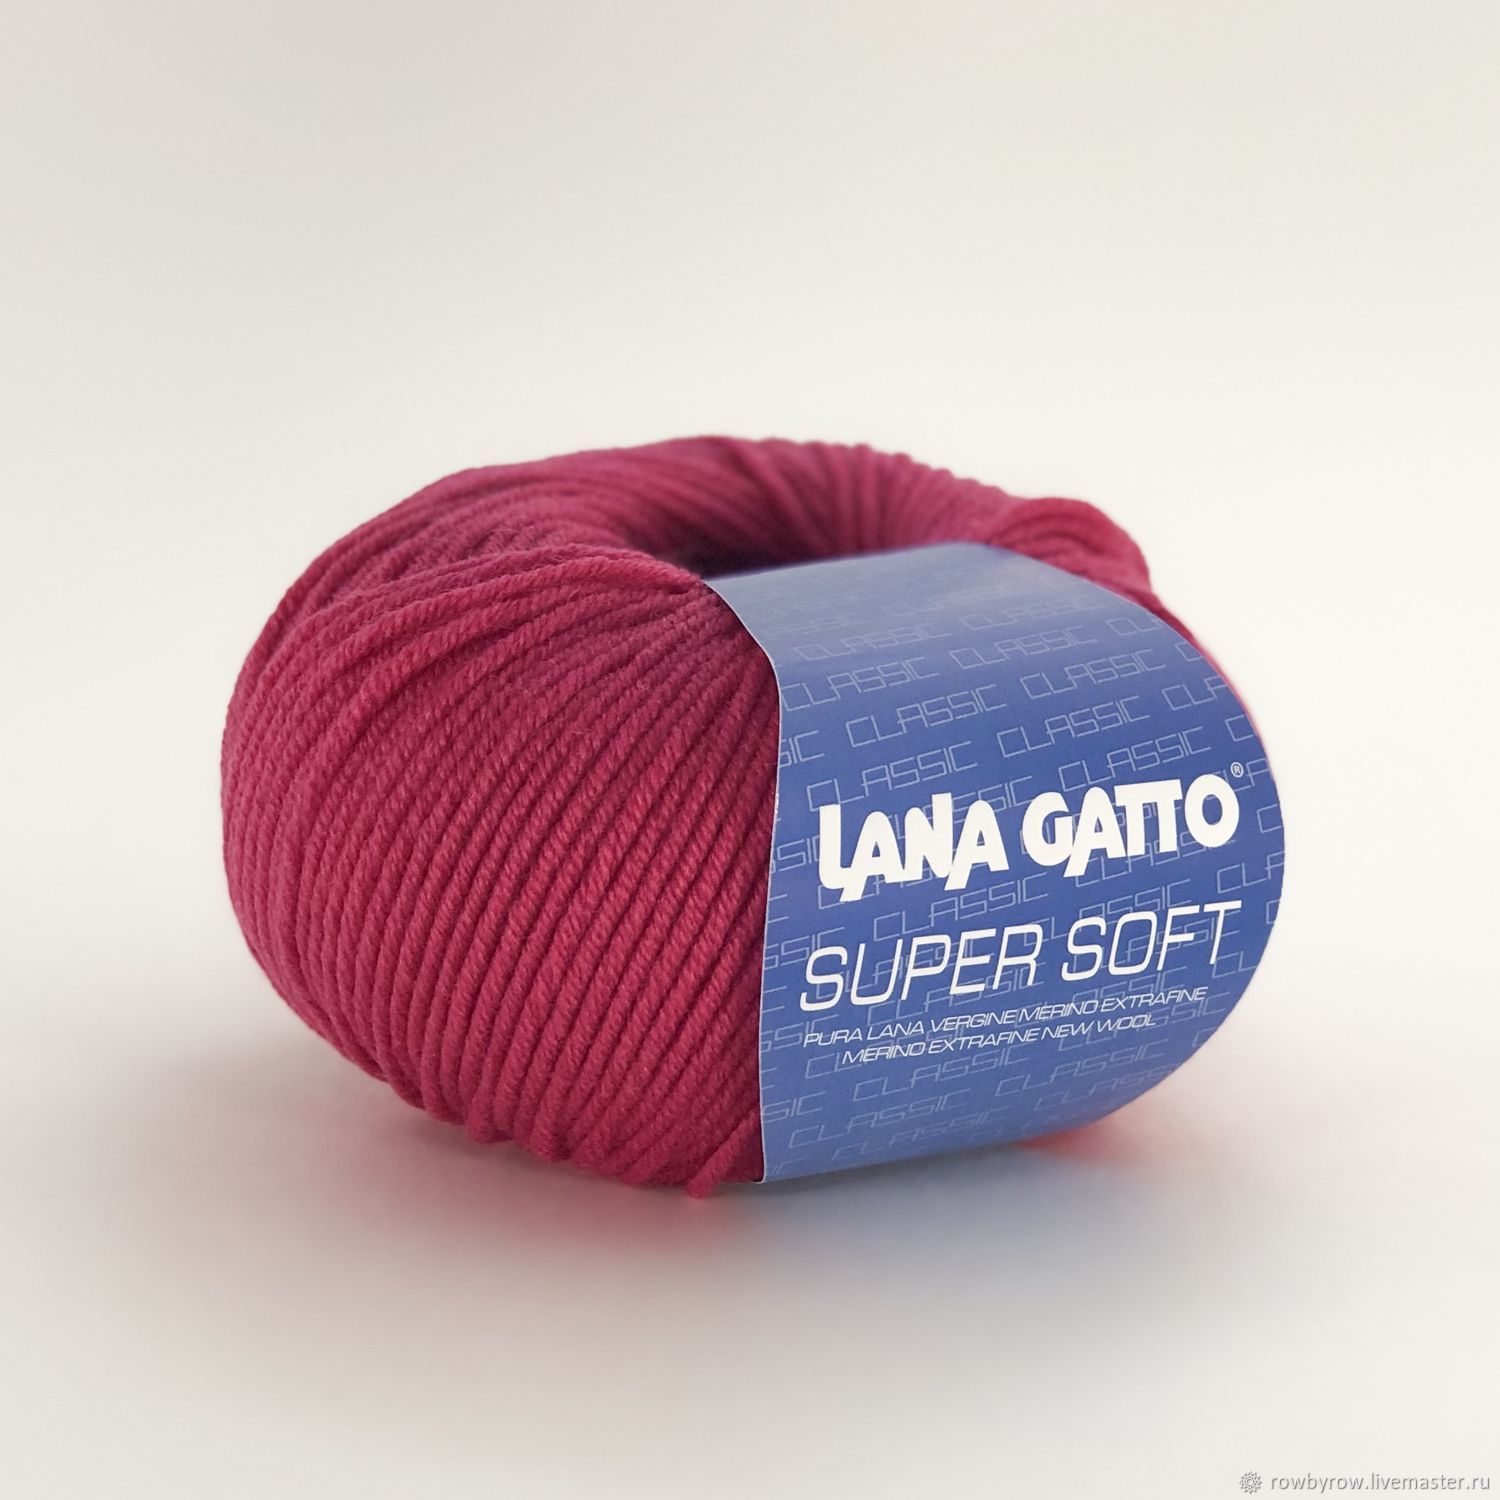 Lana gatto. Lana gatto super Soft цвет 05240.